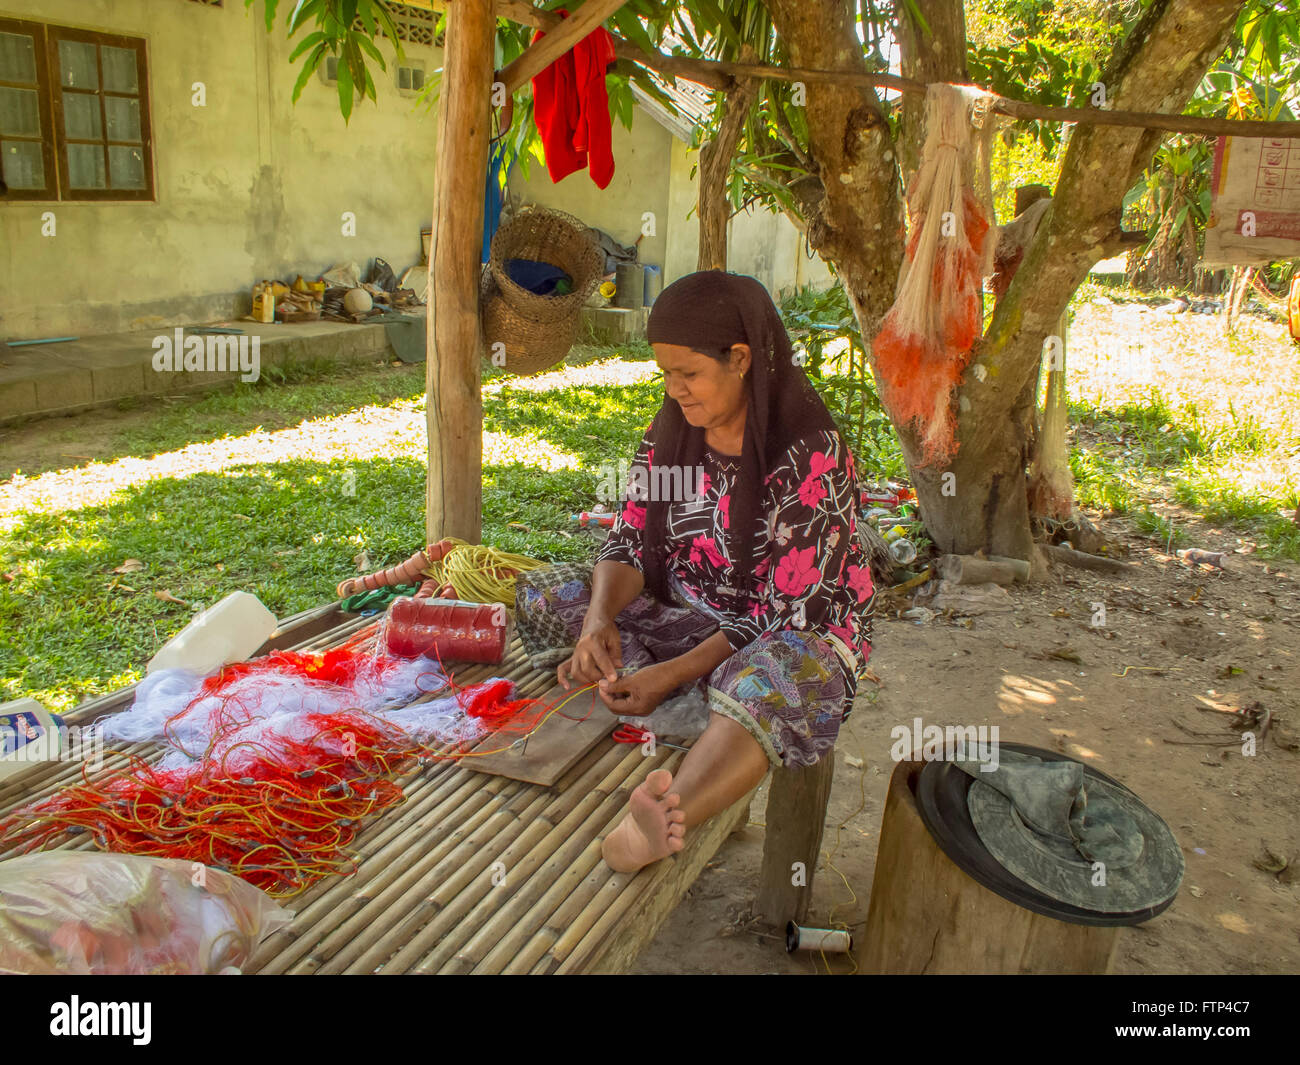 Kho Yao Yai island local woman in traditional costume repairs a fishing net on a bench. Stock Photo